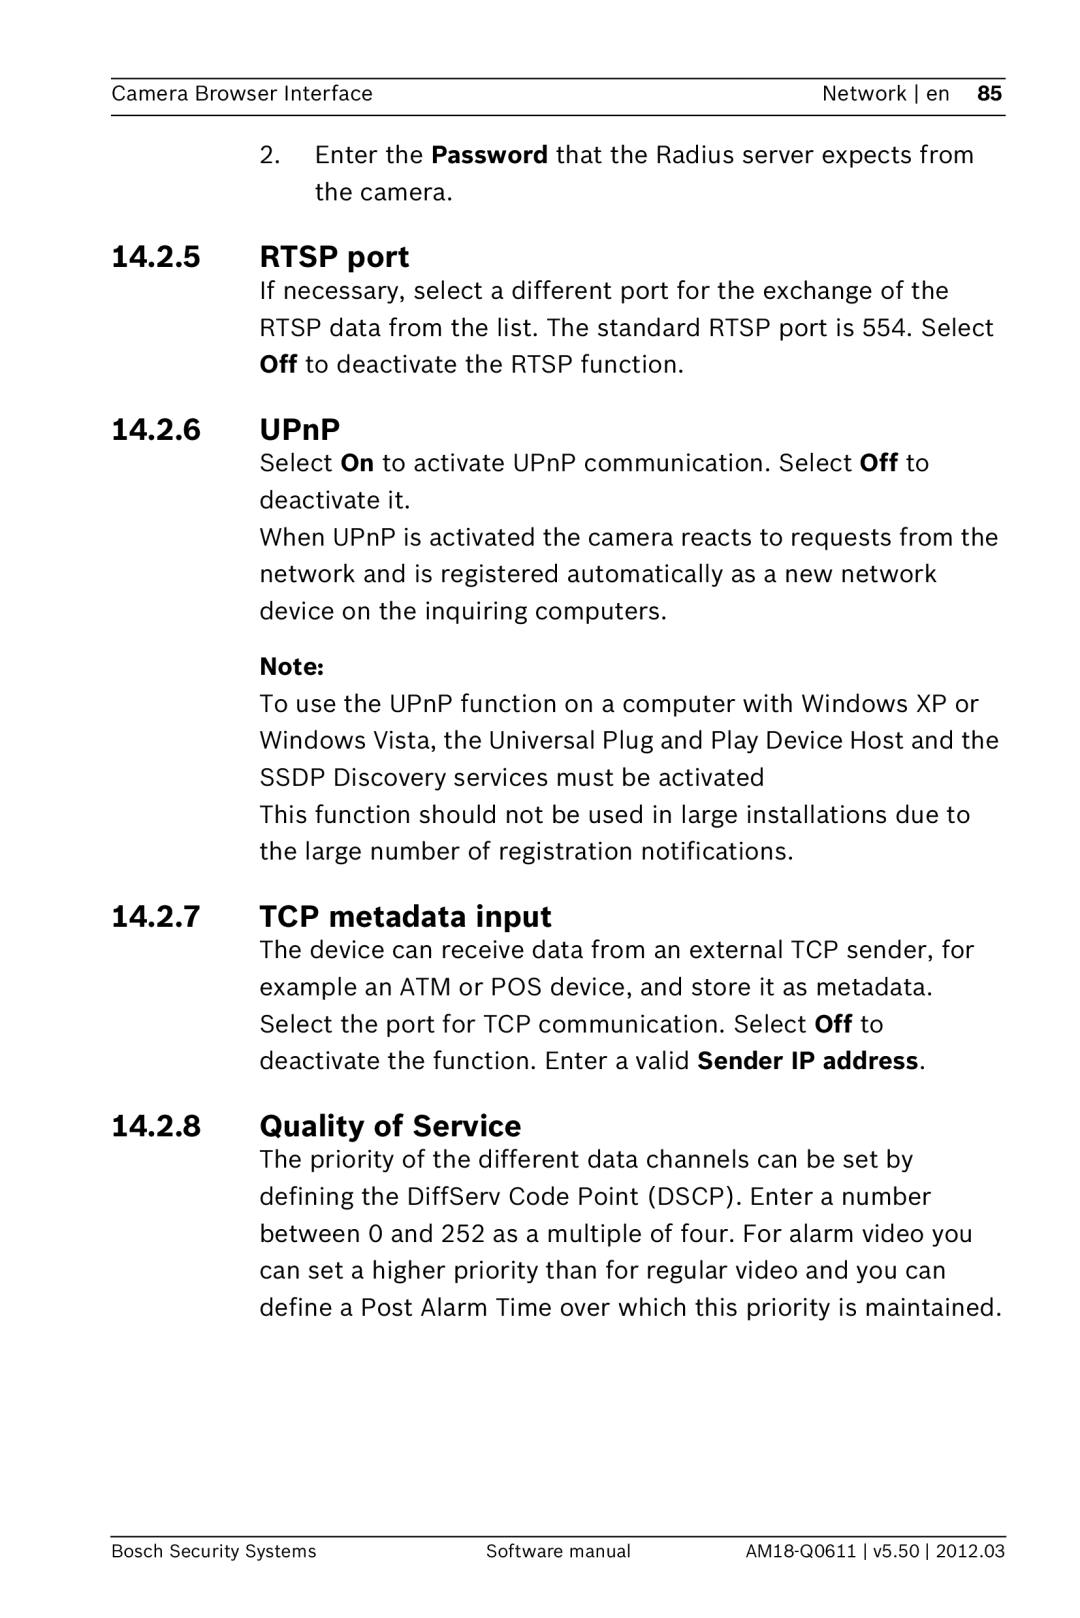 Bosch Appliances FW5.50 software manual 14.2.5RTSP port, 14.2.6UPnP, 14.2.7TCP metadata input, 14.2.8Quality of Service 